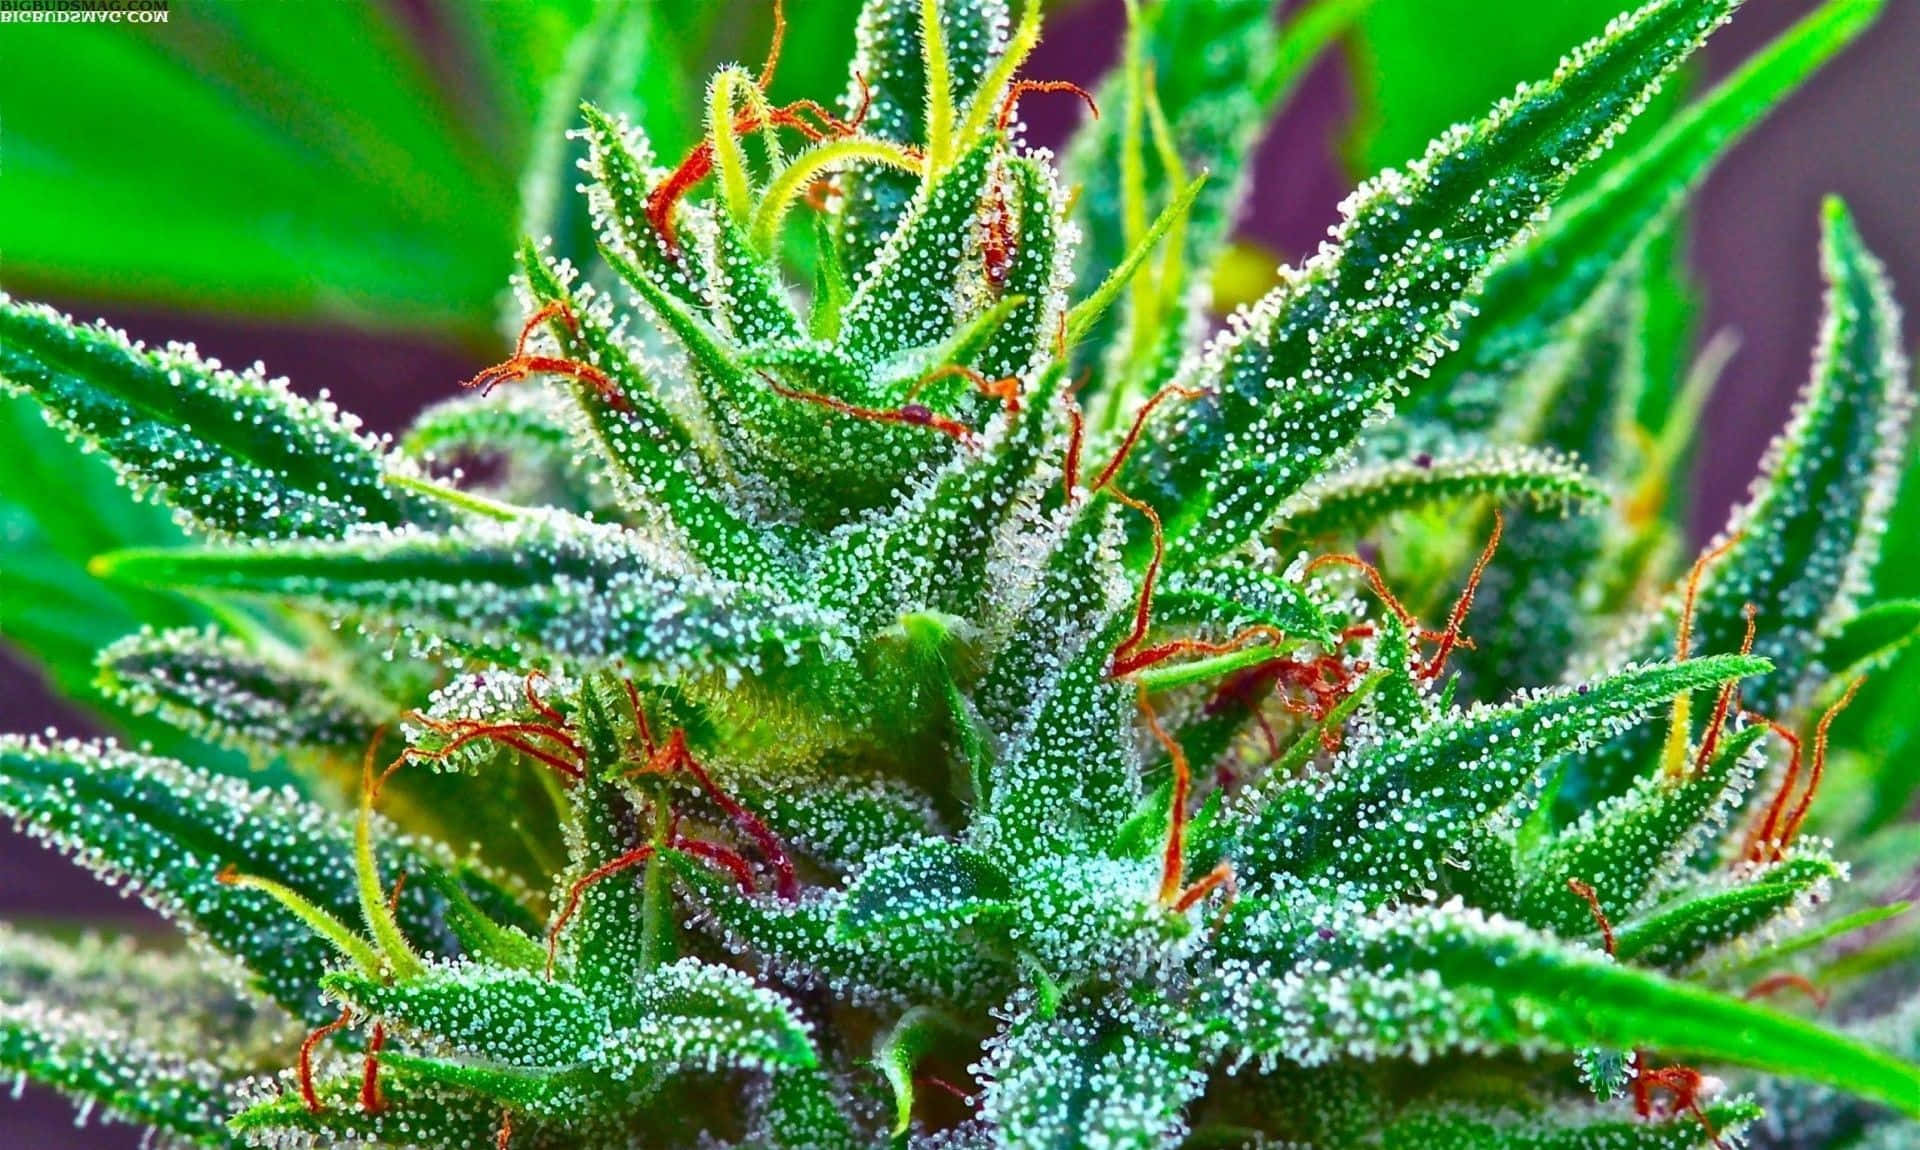 A vibrant close-up of a marijuana bud on a white background